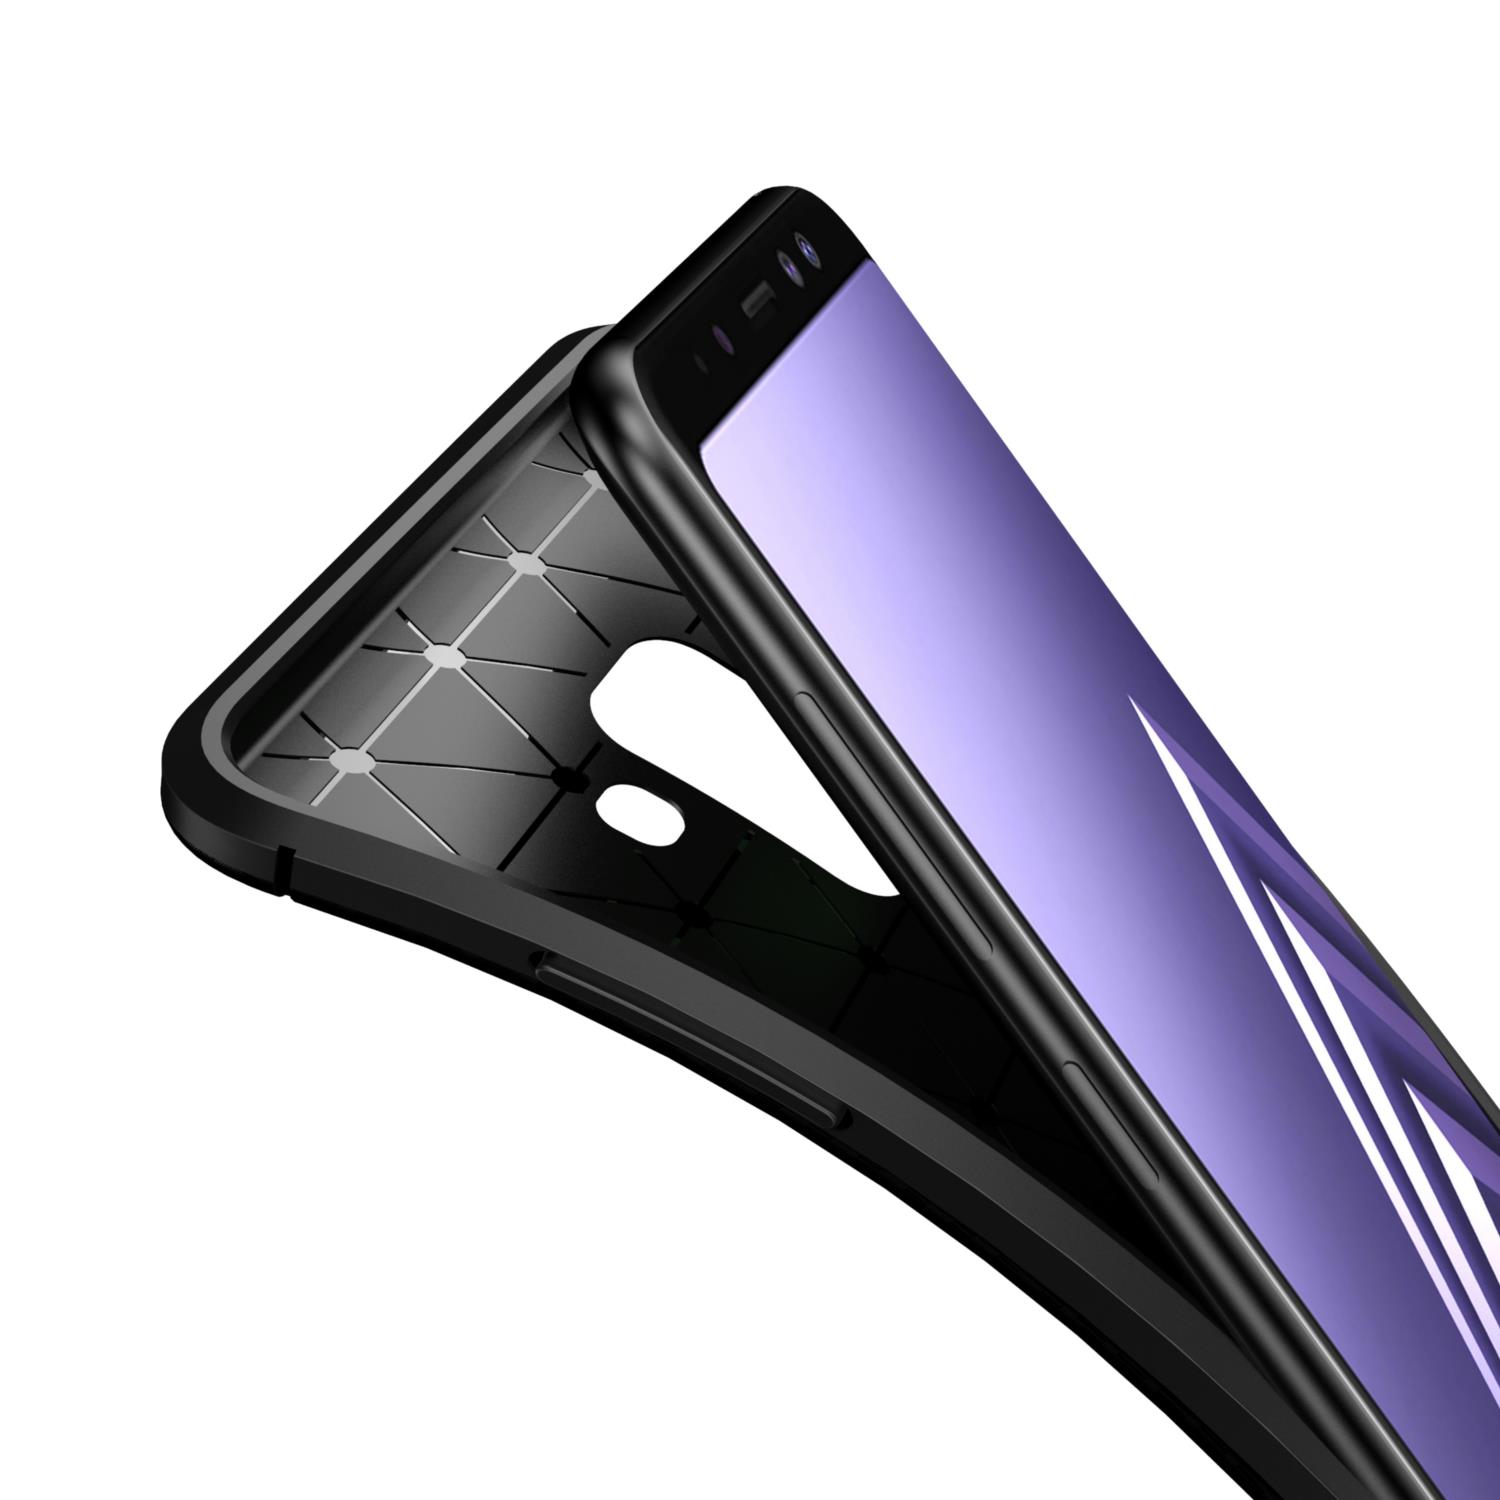 Bakeey-Protective-Case-For-iPhone-A8-2018-Slim-Carbon-Fiber-Fingerprint-Resistant-Soft-TPU-1361108-7